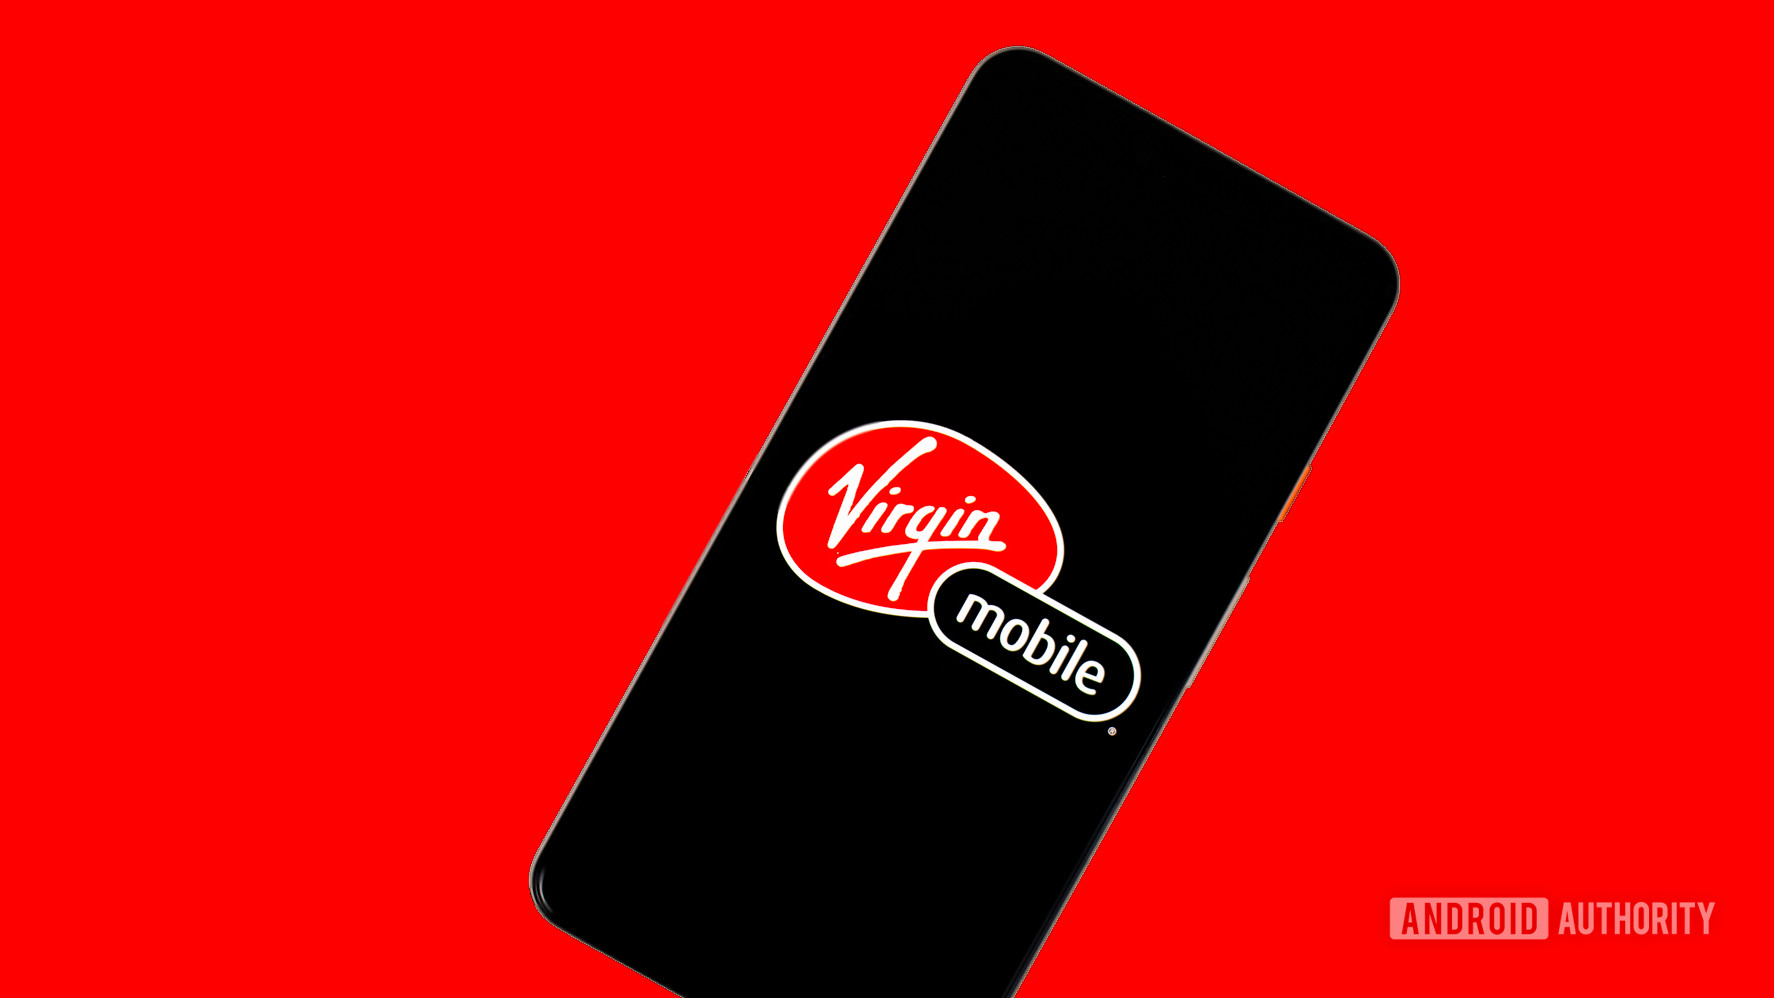 Virgin Mobile MVNO carrier logo on phone stock photo 3